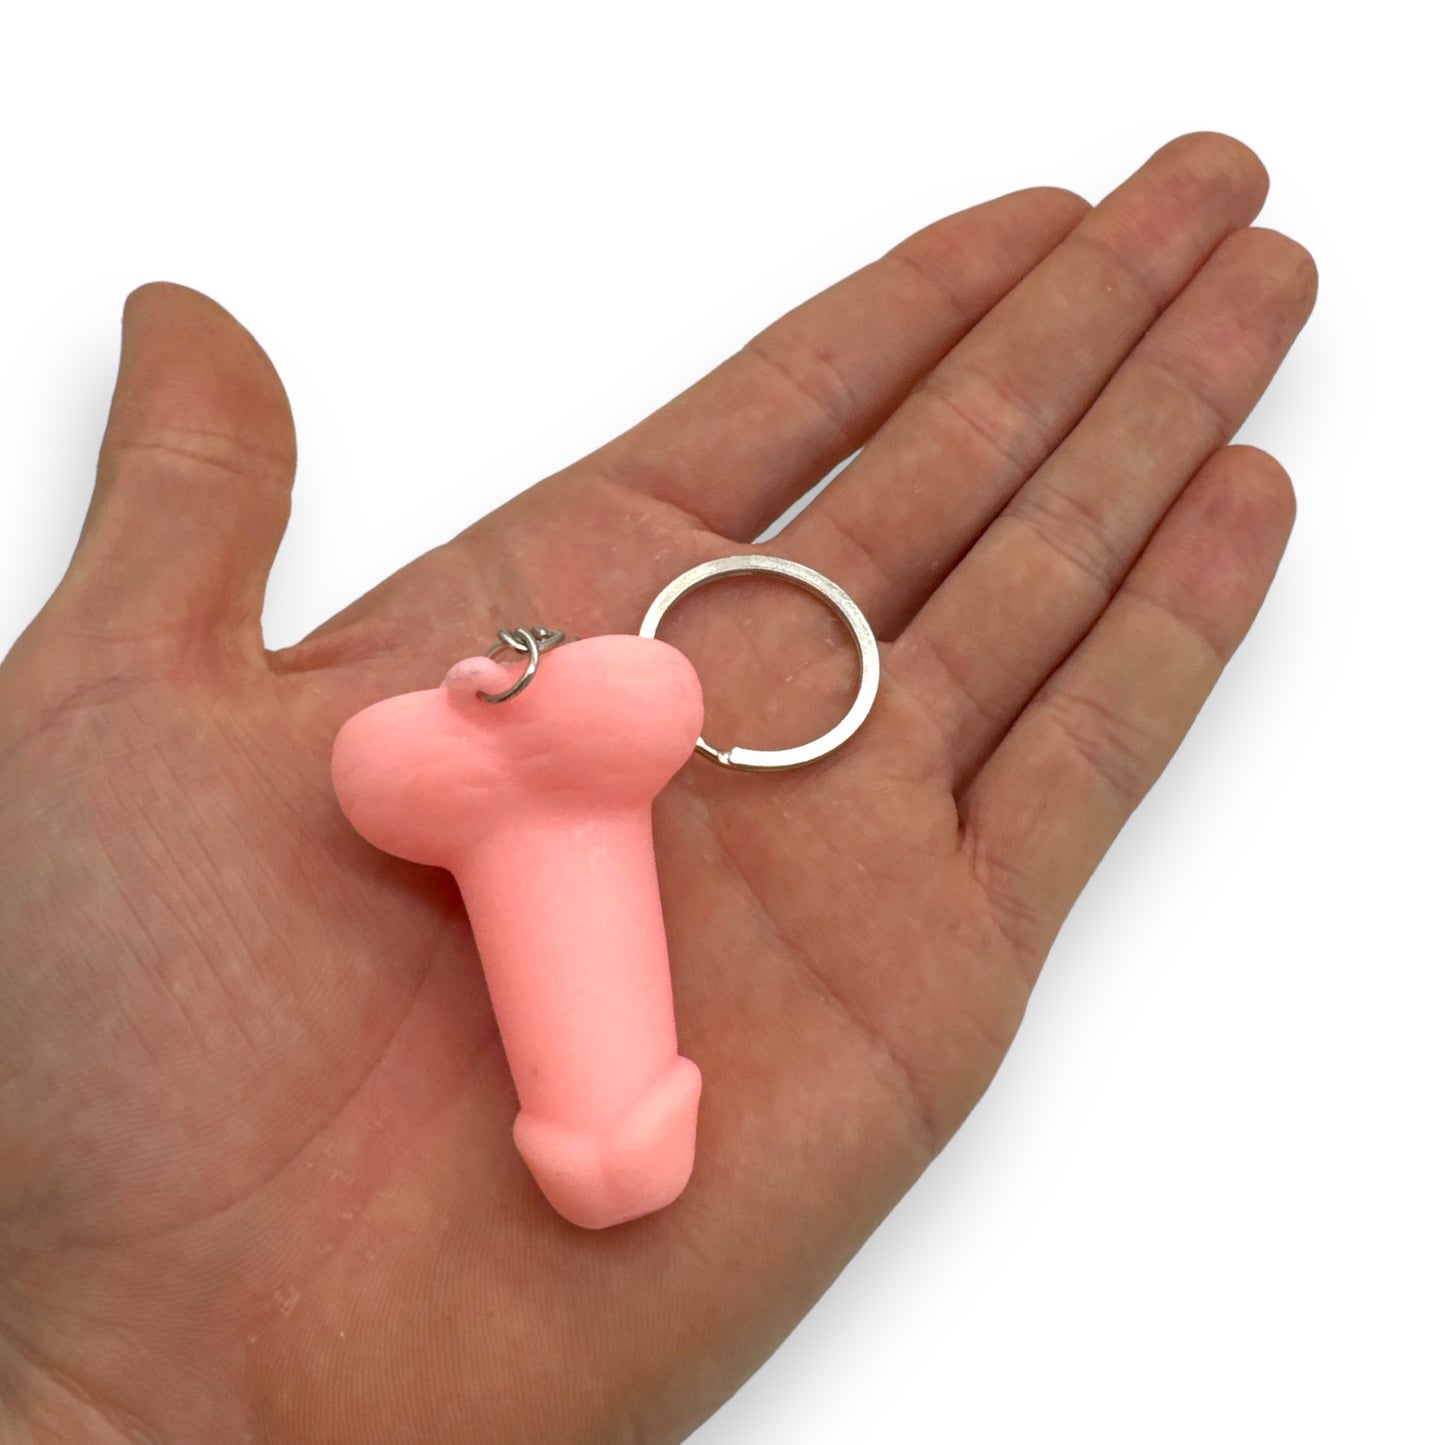 Kinky Pleasure - KP026 - Keychain Penis, Muchi, Boobs - 3 Models